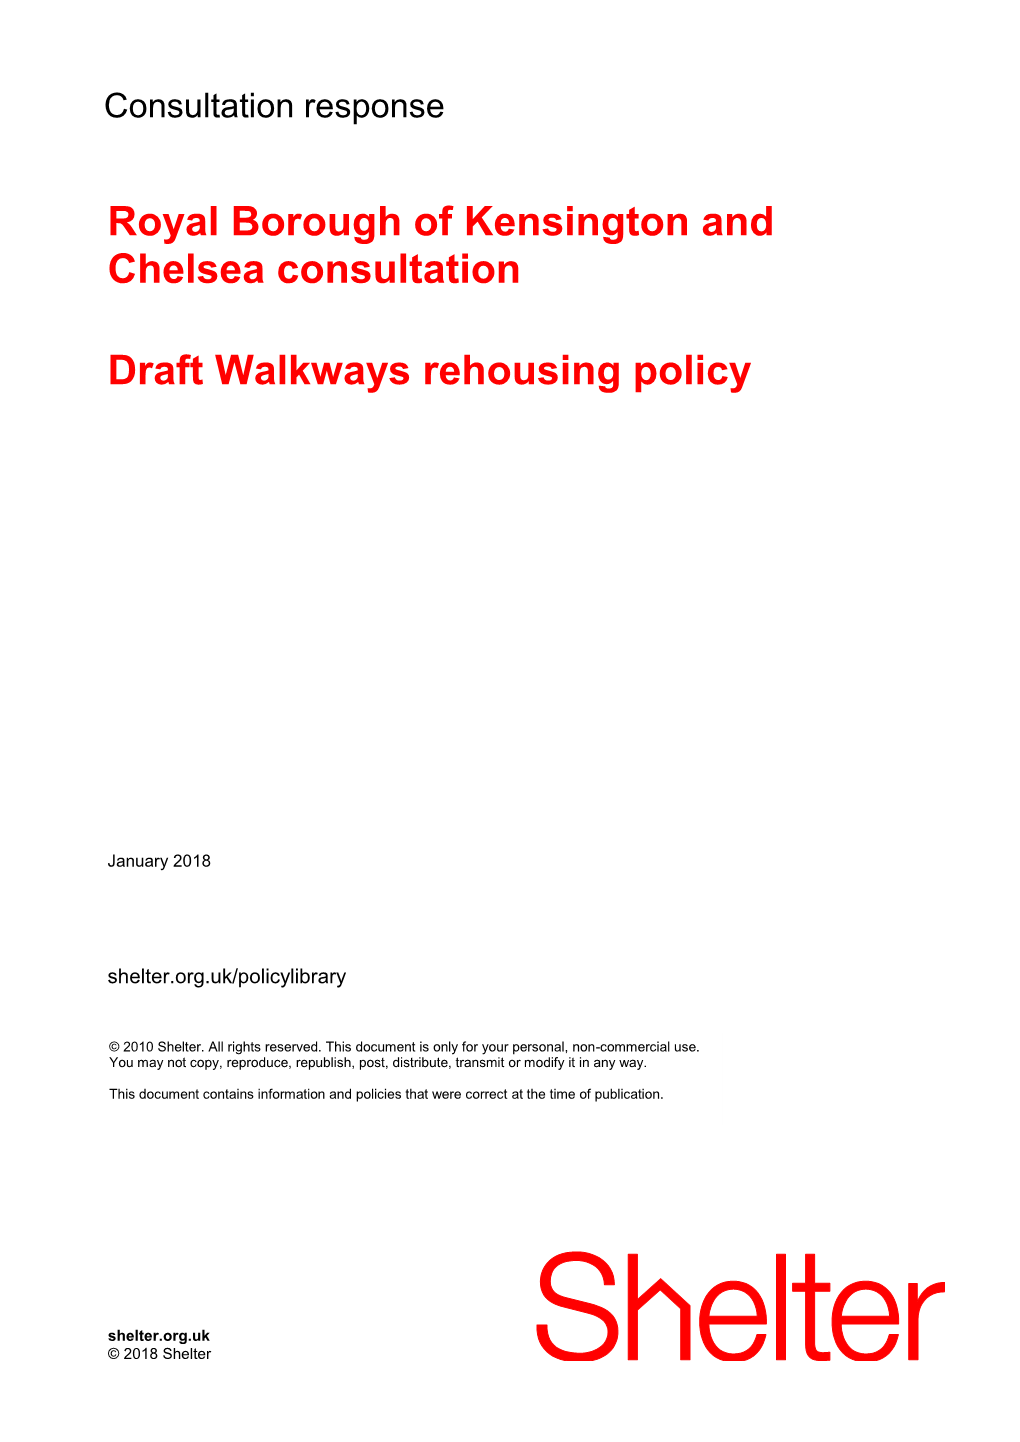 Royal Borough of Kensington and Chelsea Consultation Draft Walkways Rehousing Policy